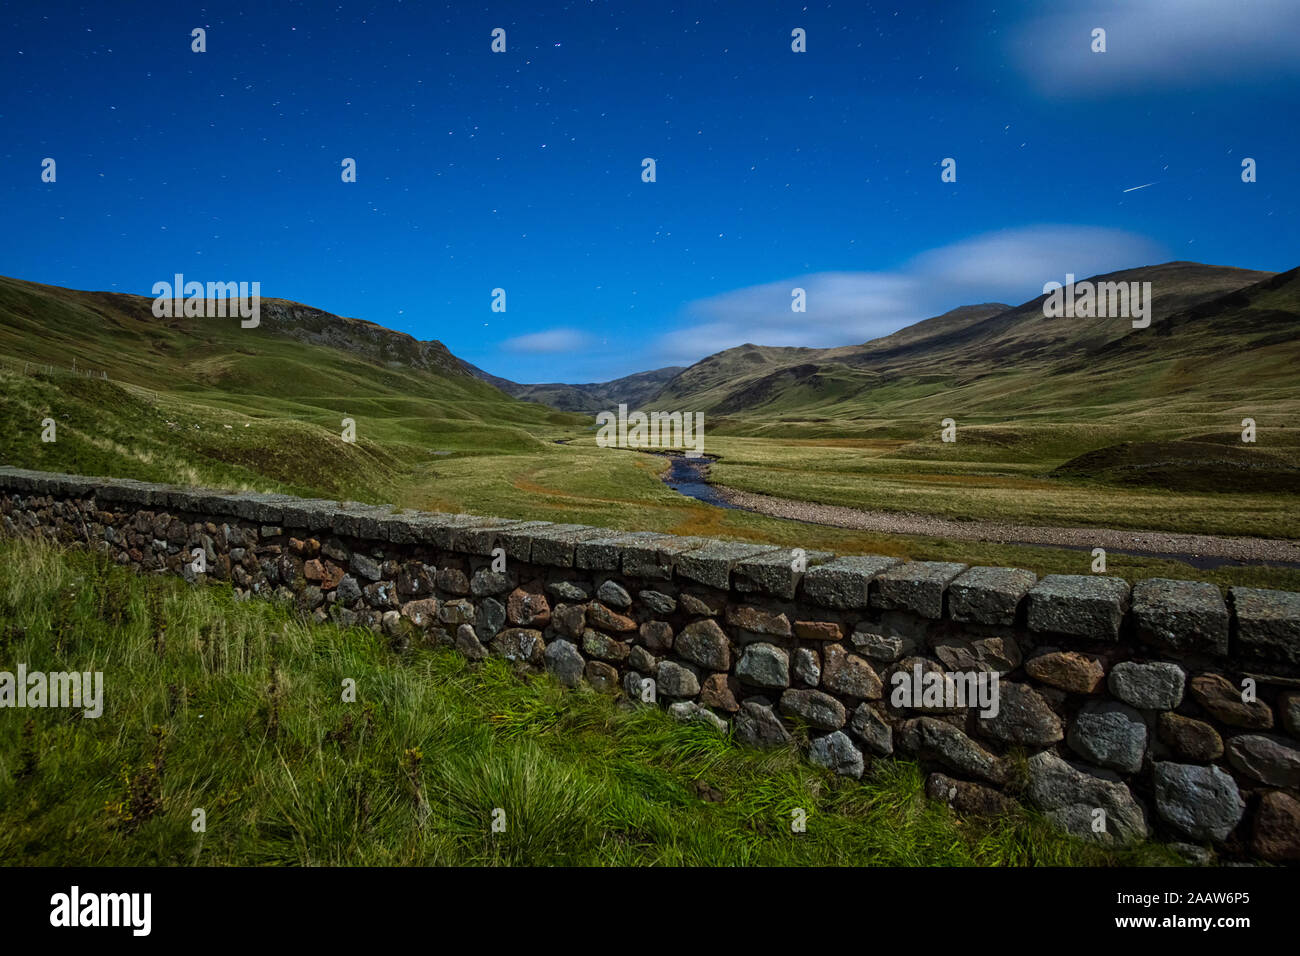 UK, Scotland, Glenshee, landscape with stone wall under starry sky Stock Photo